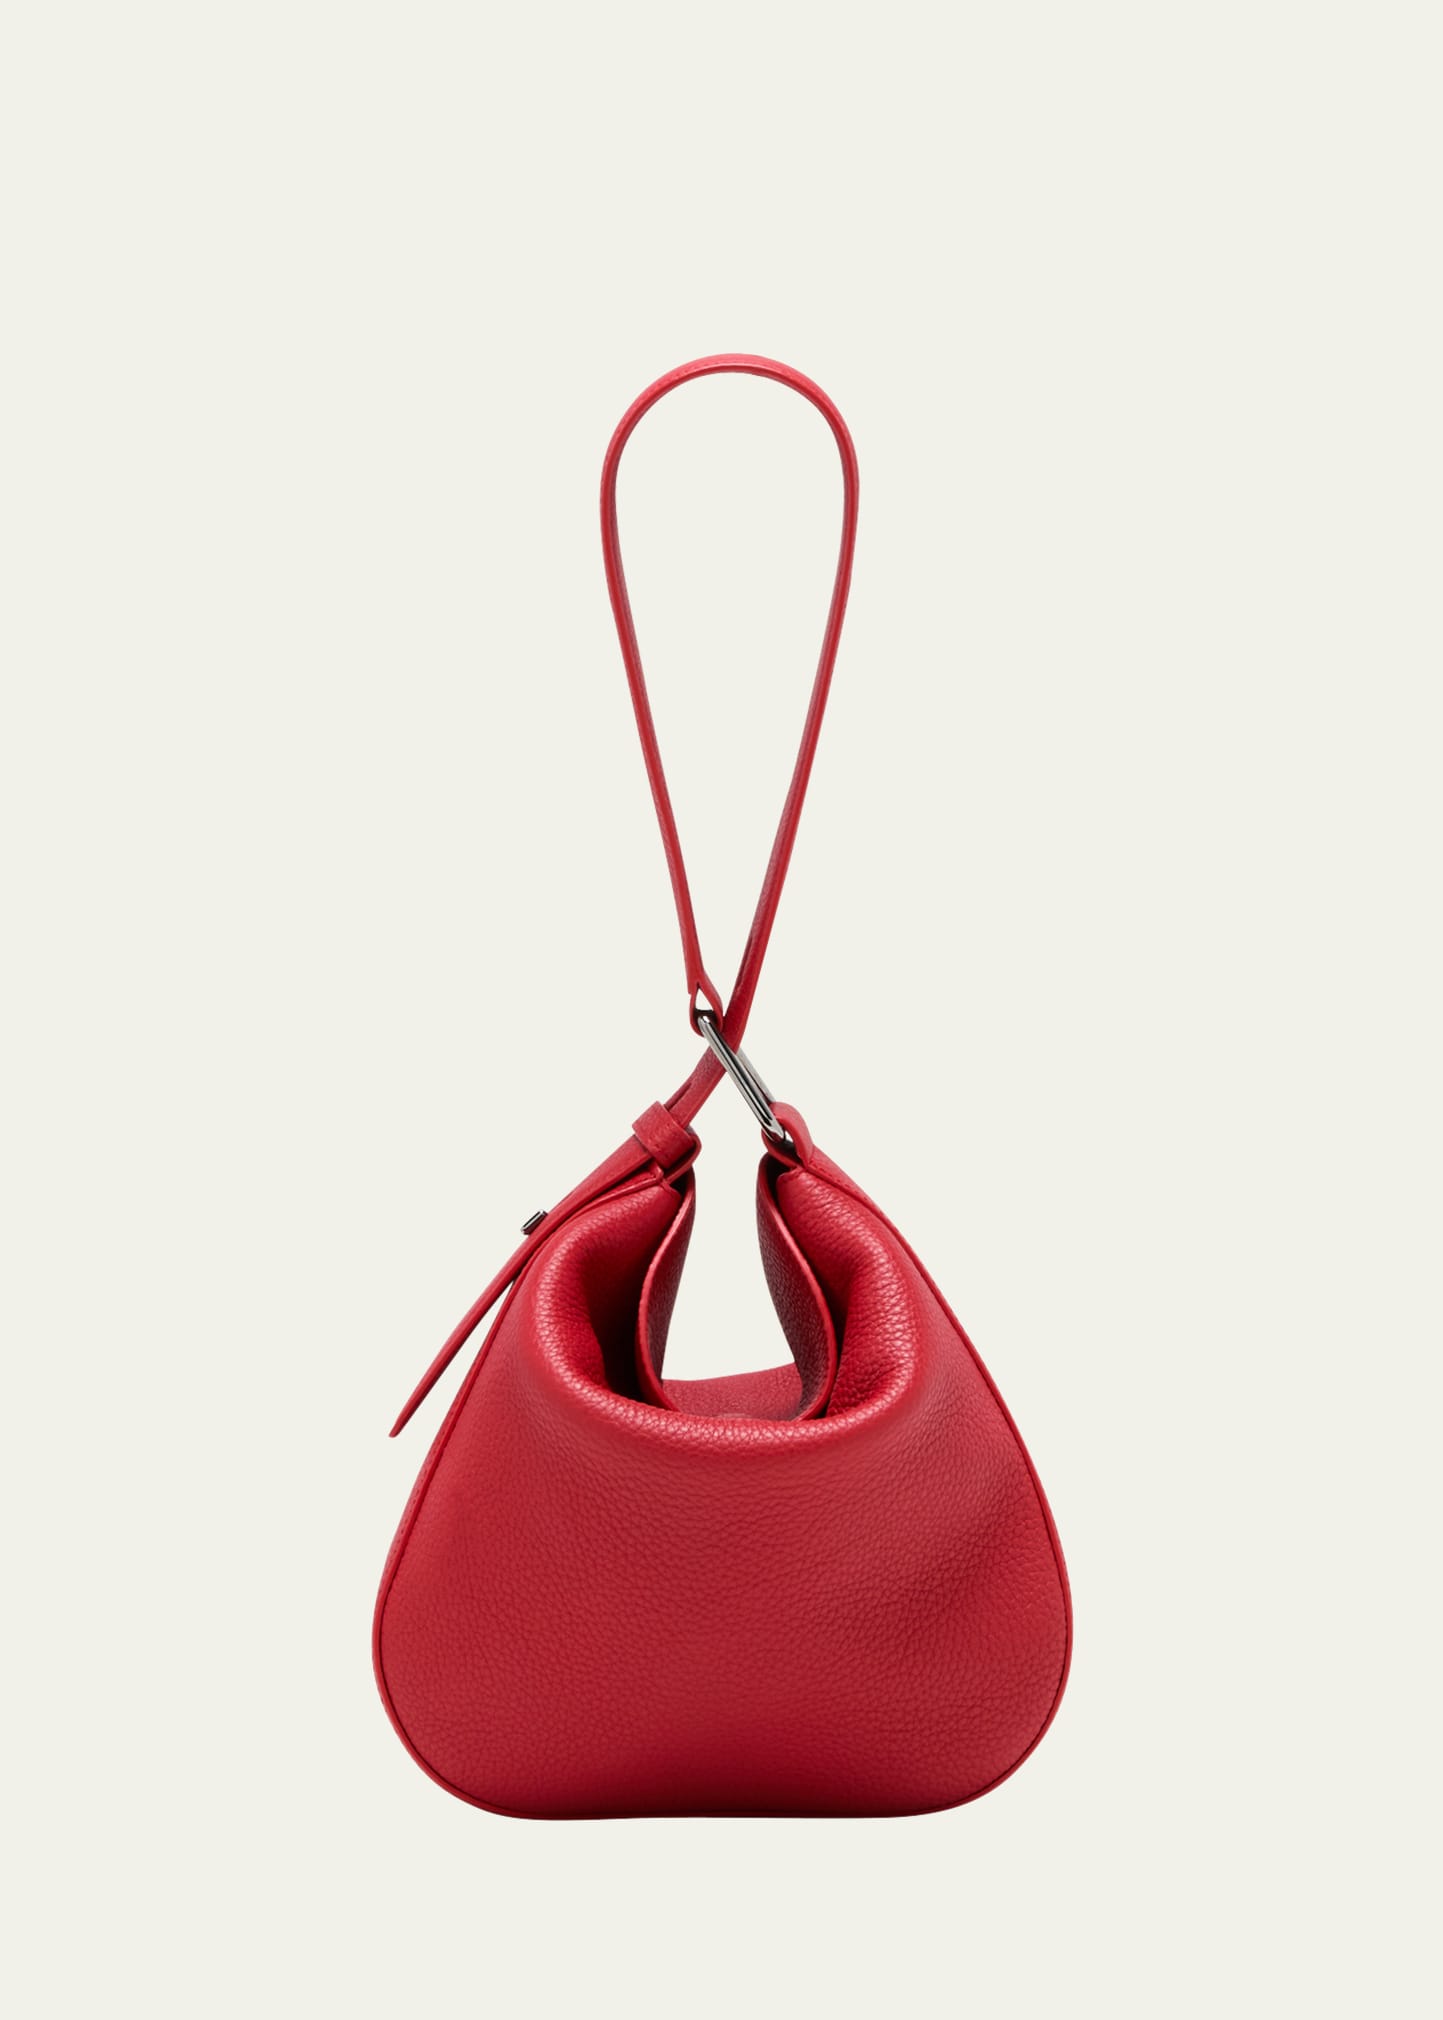 MEET ANNA​ 🤎 Introducing the Anna bag from @akrisofficial , an